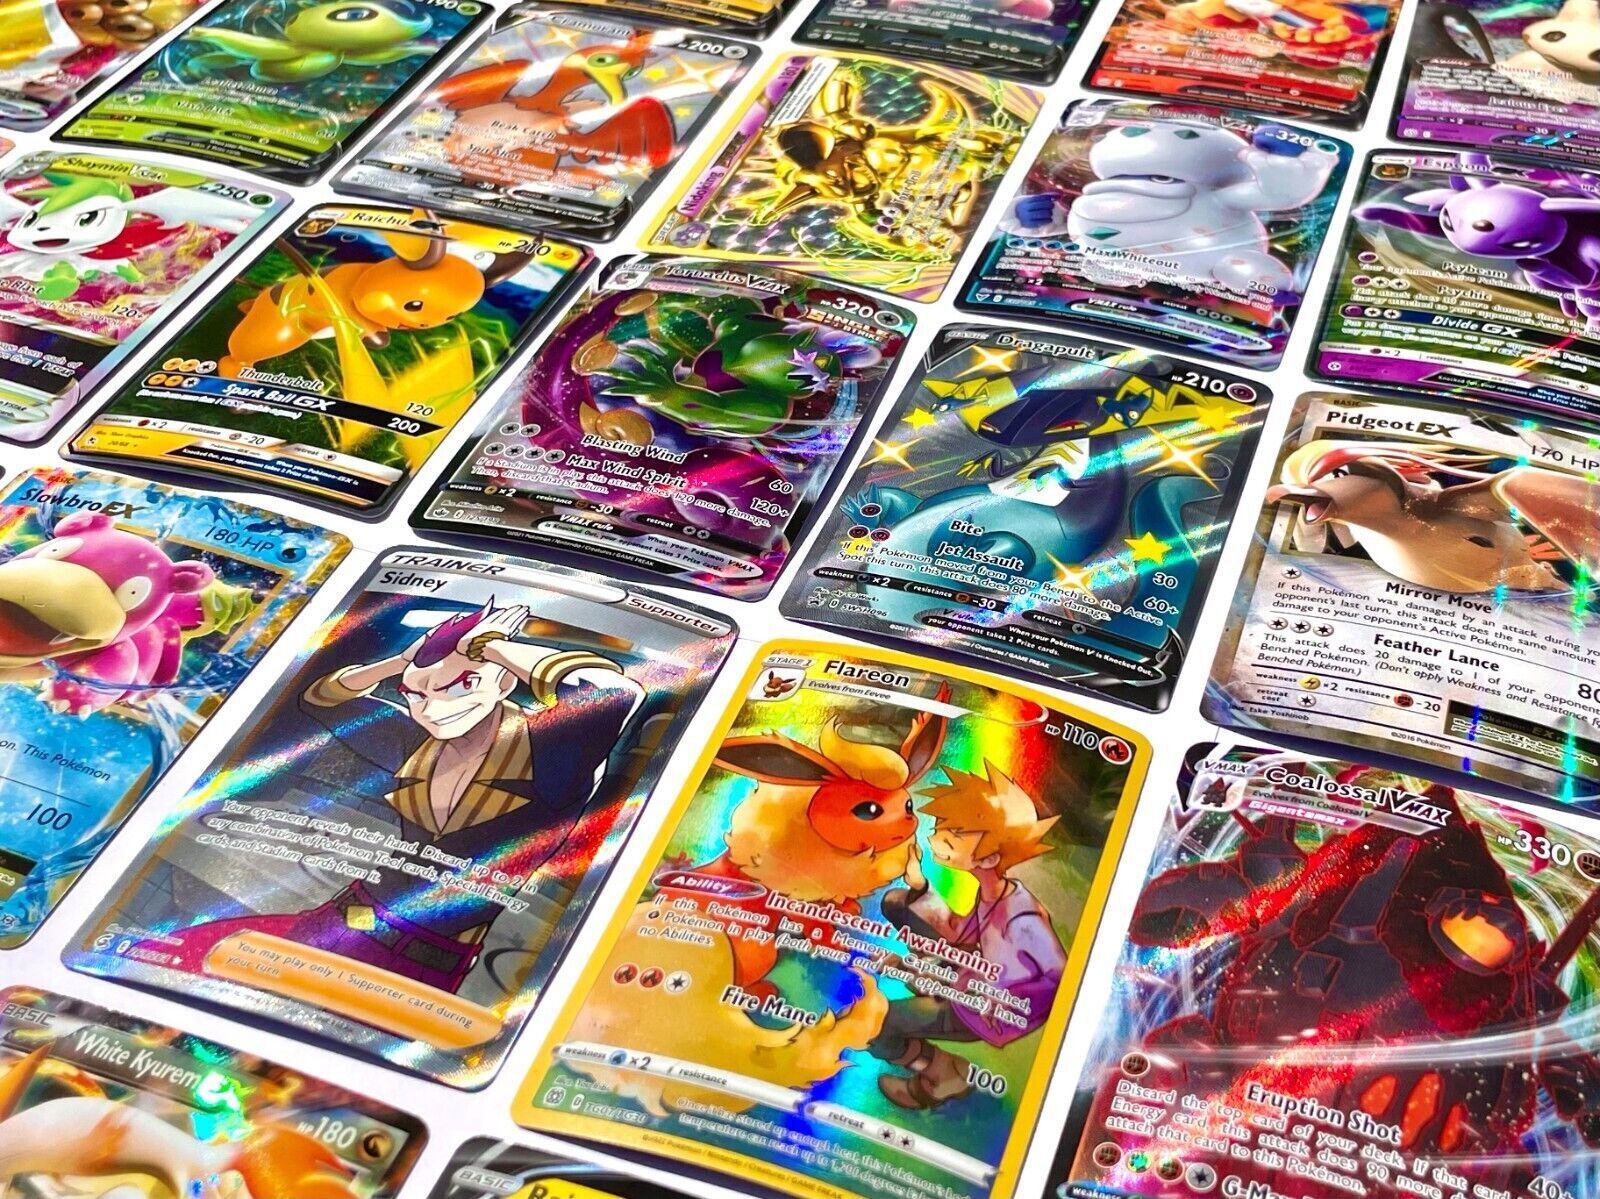 Genuine Pokemon Cards Joblot Bundle Including Ultra Rares, V's, Full Arts, EX,GX